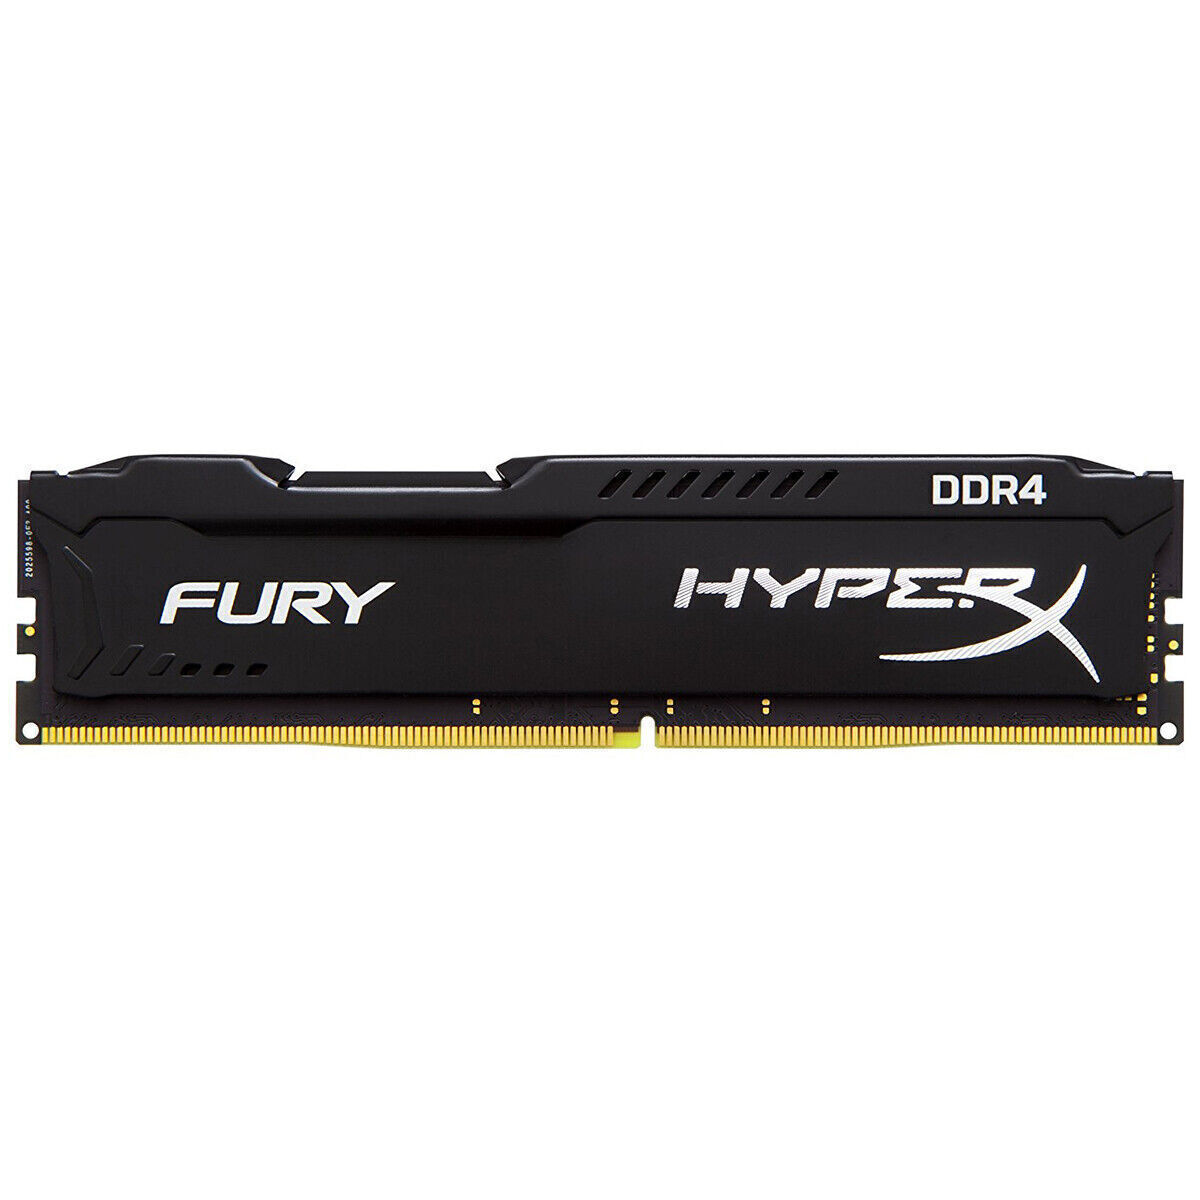 HyperX FURY DDR4 4/8/16/32GB 3200 3600 2400 2666 MHZ Desktop RAM Memory DIMM LOT